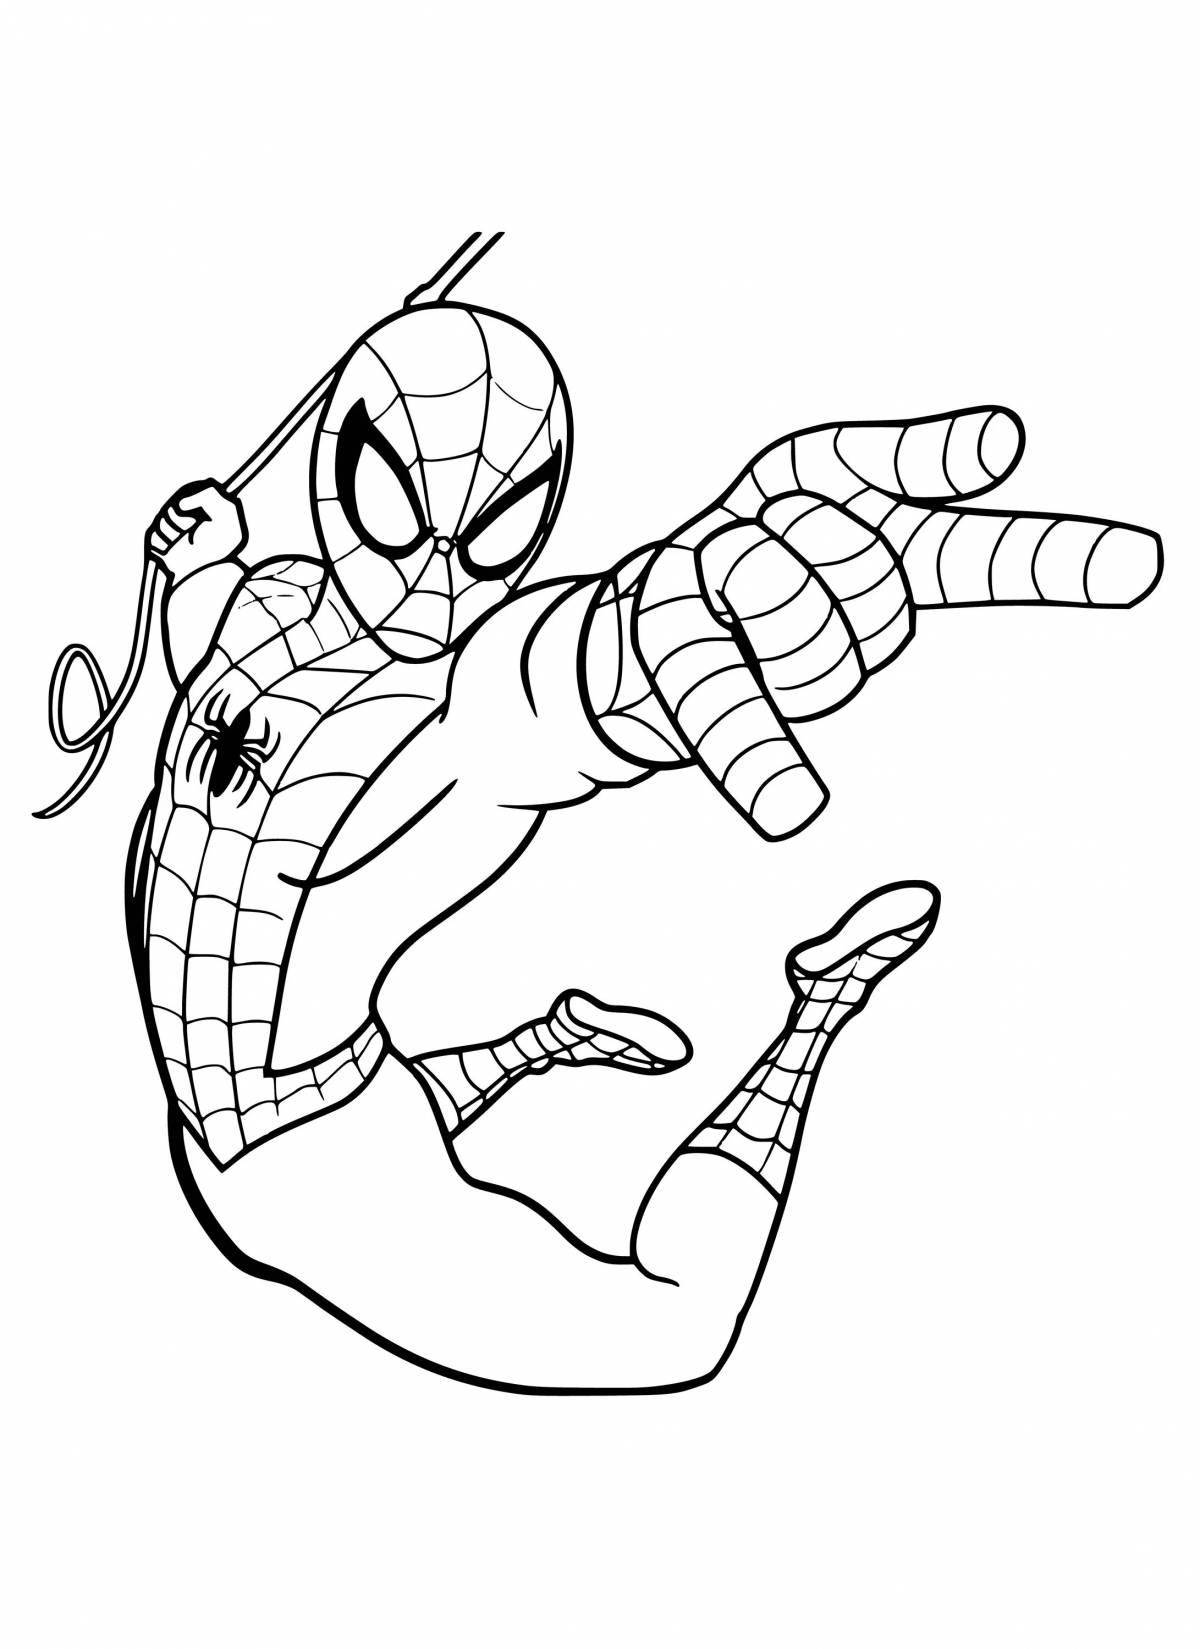 Spiderman creepy coloring page